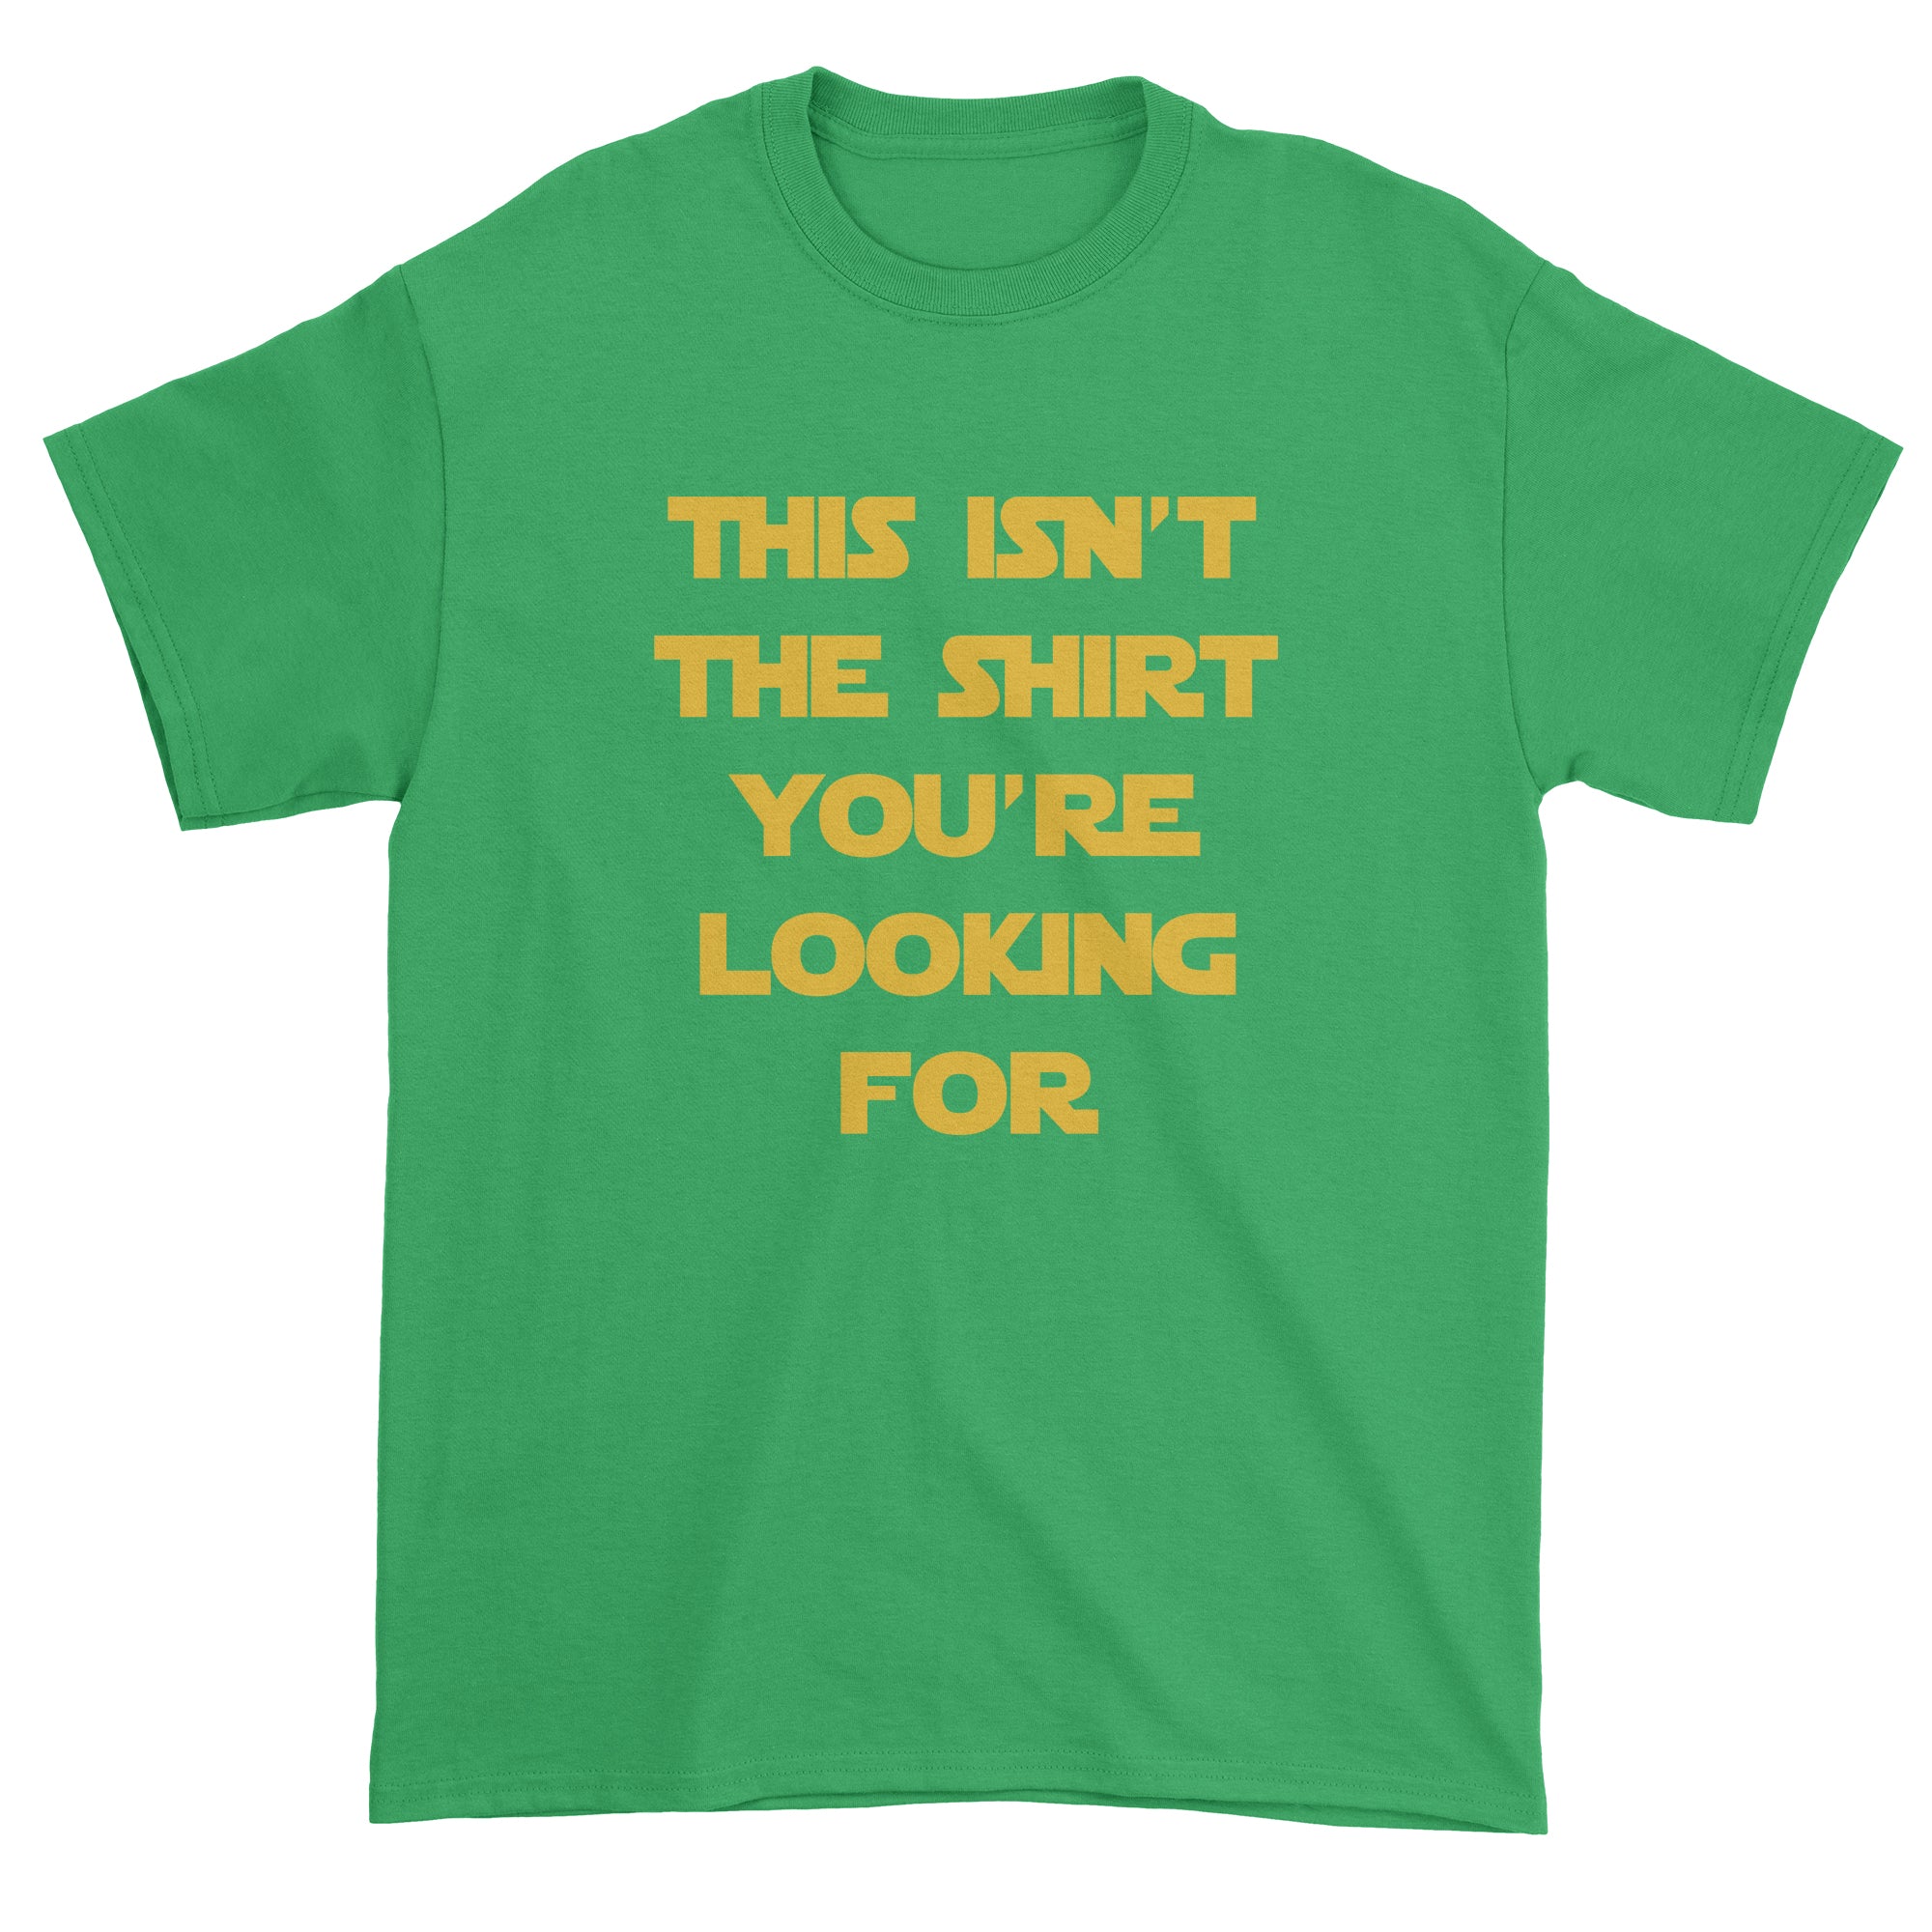 Funny Mind Trick Star Warship Men's T-Shirt